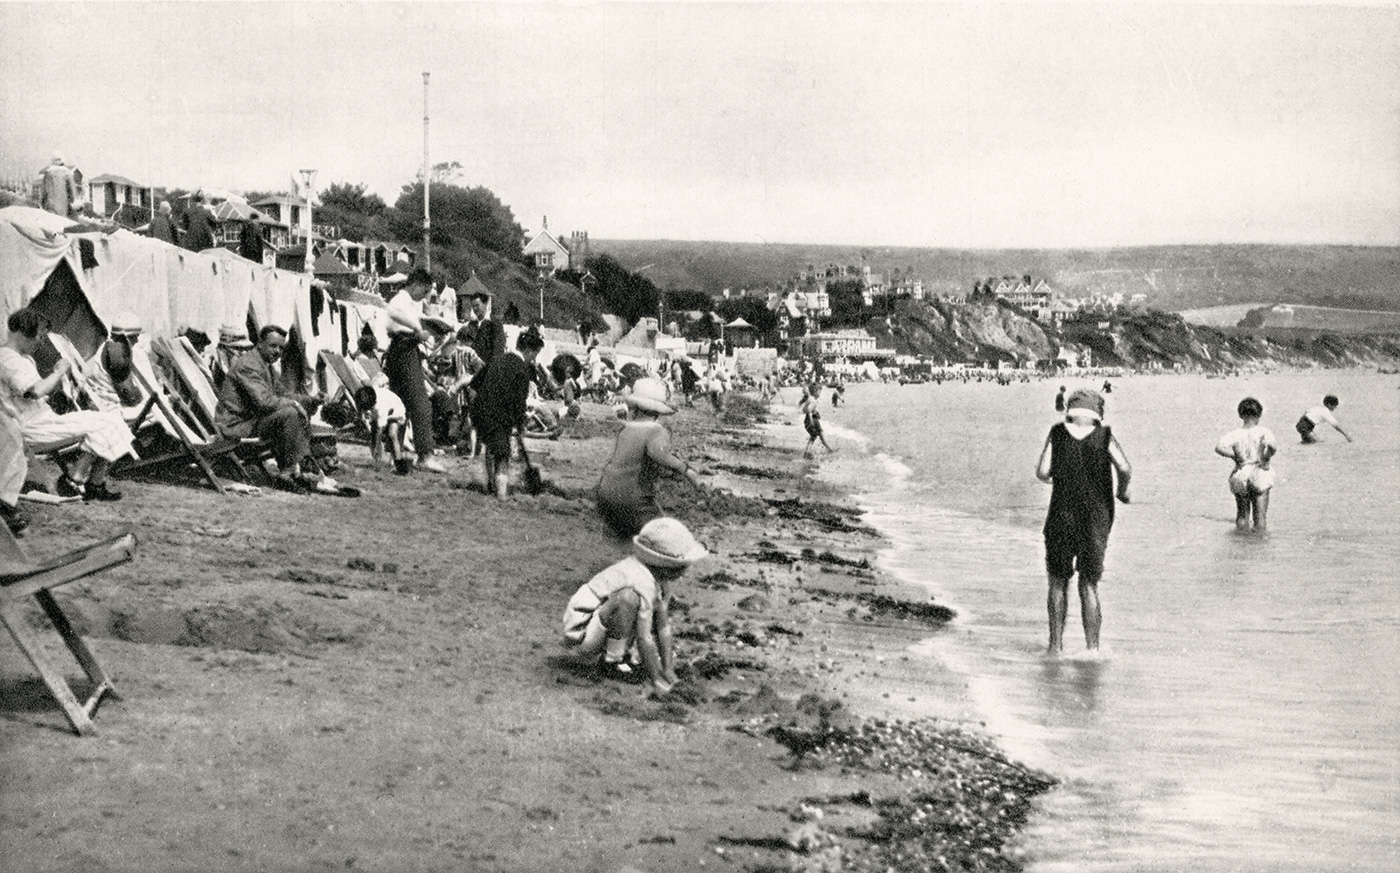 Children enjoying the beach